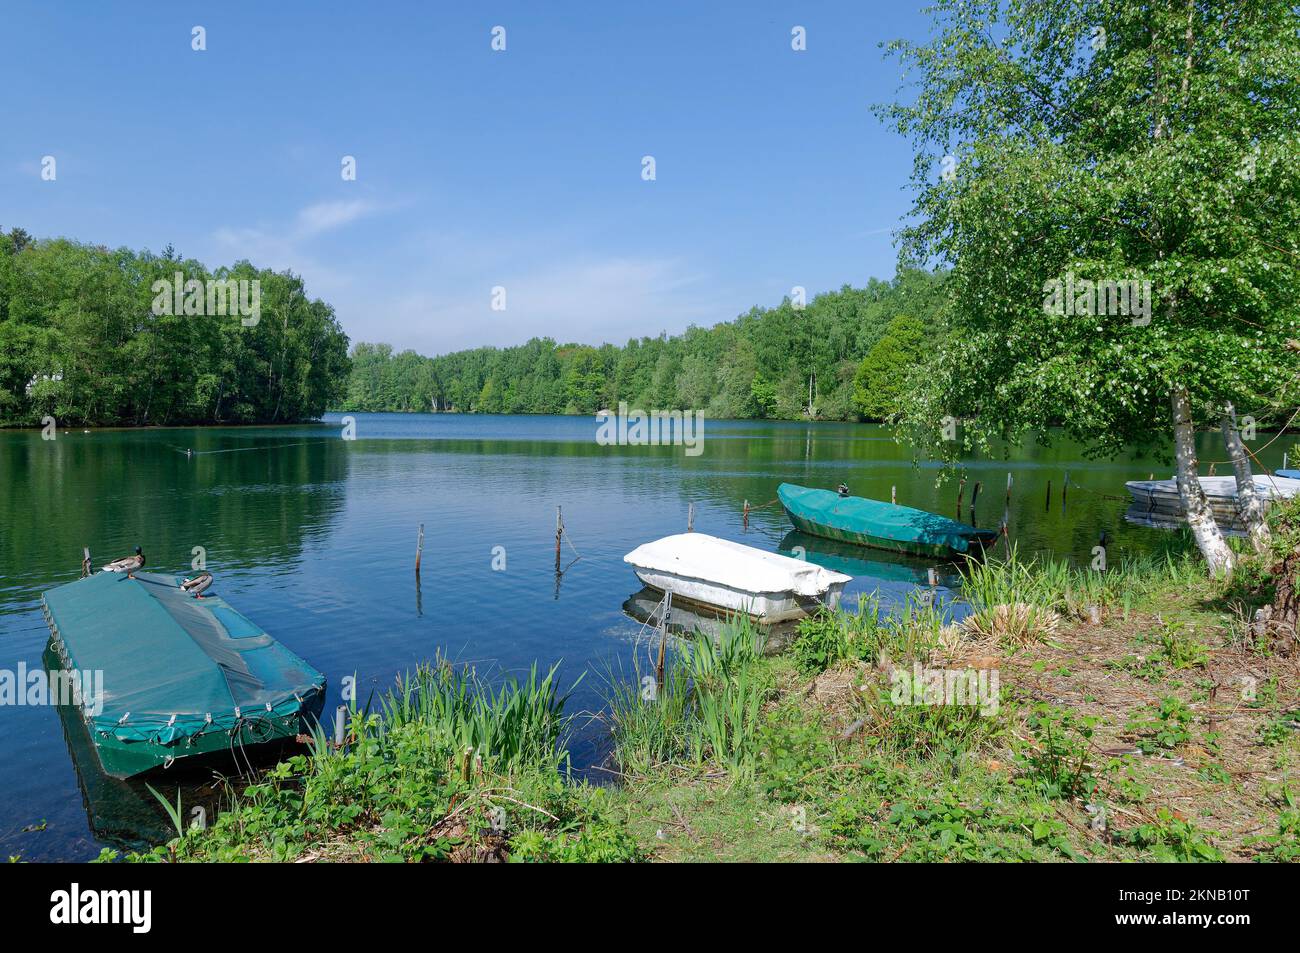 Lake Venekotensee,Maas-Schwalm-Nette Nature Park,lower Rhine region,Germany Stock Photo